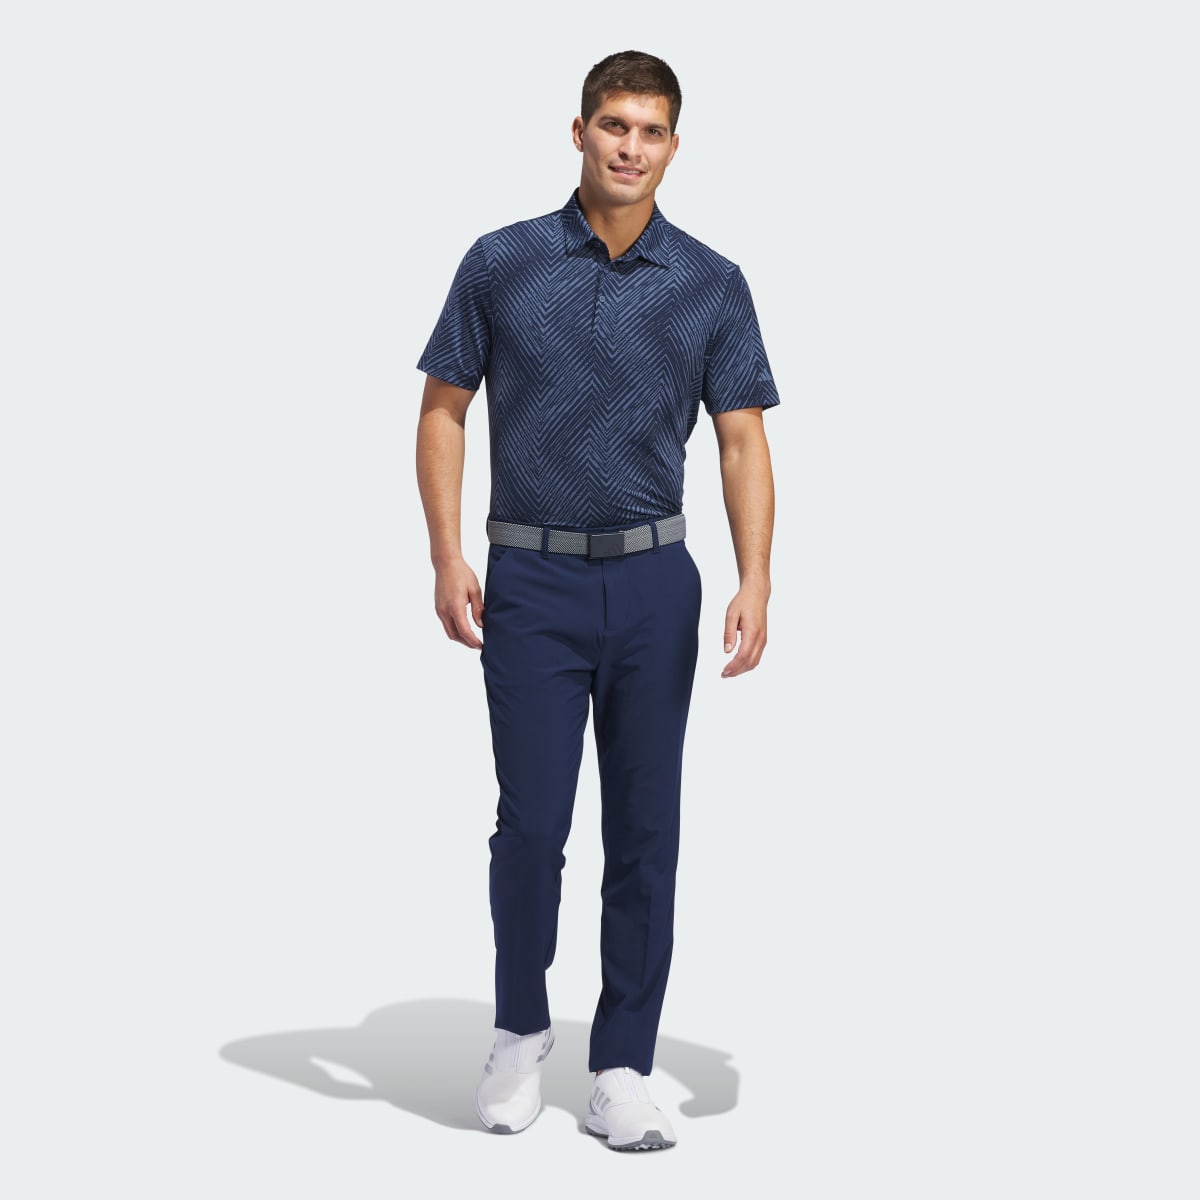 Adidas Ultimate365 Allover Print Polo Shirt. 6